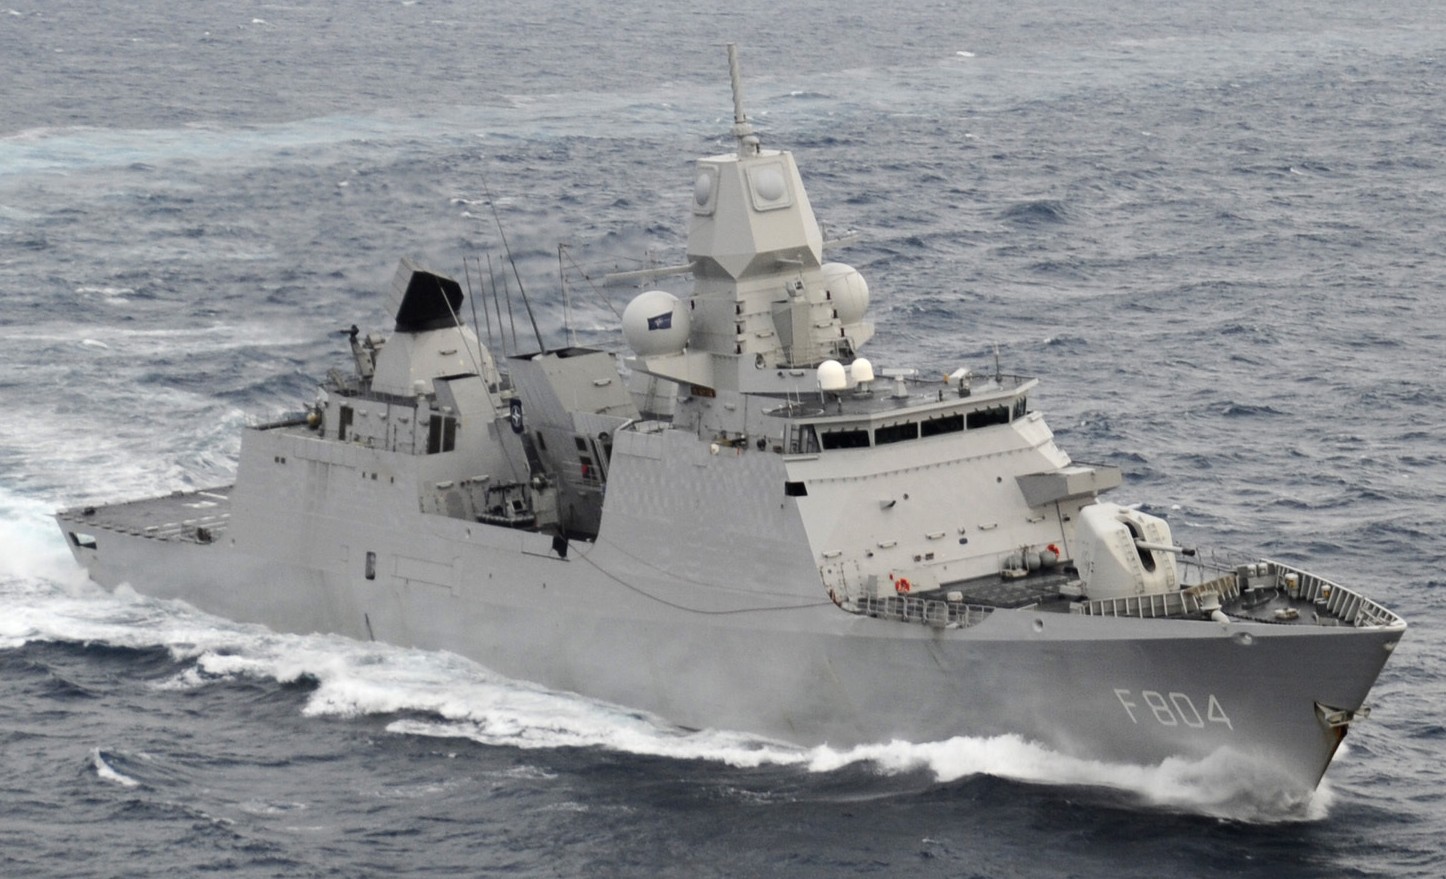 f-804 hnlms de ruyter guided missile frigate ffg lcf royal netherlands navy 11 damen schelde shipbuilding